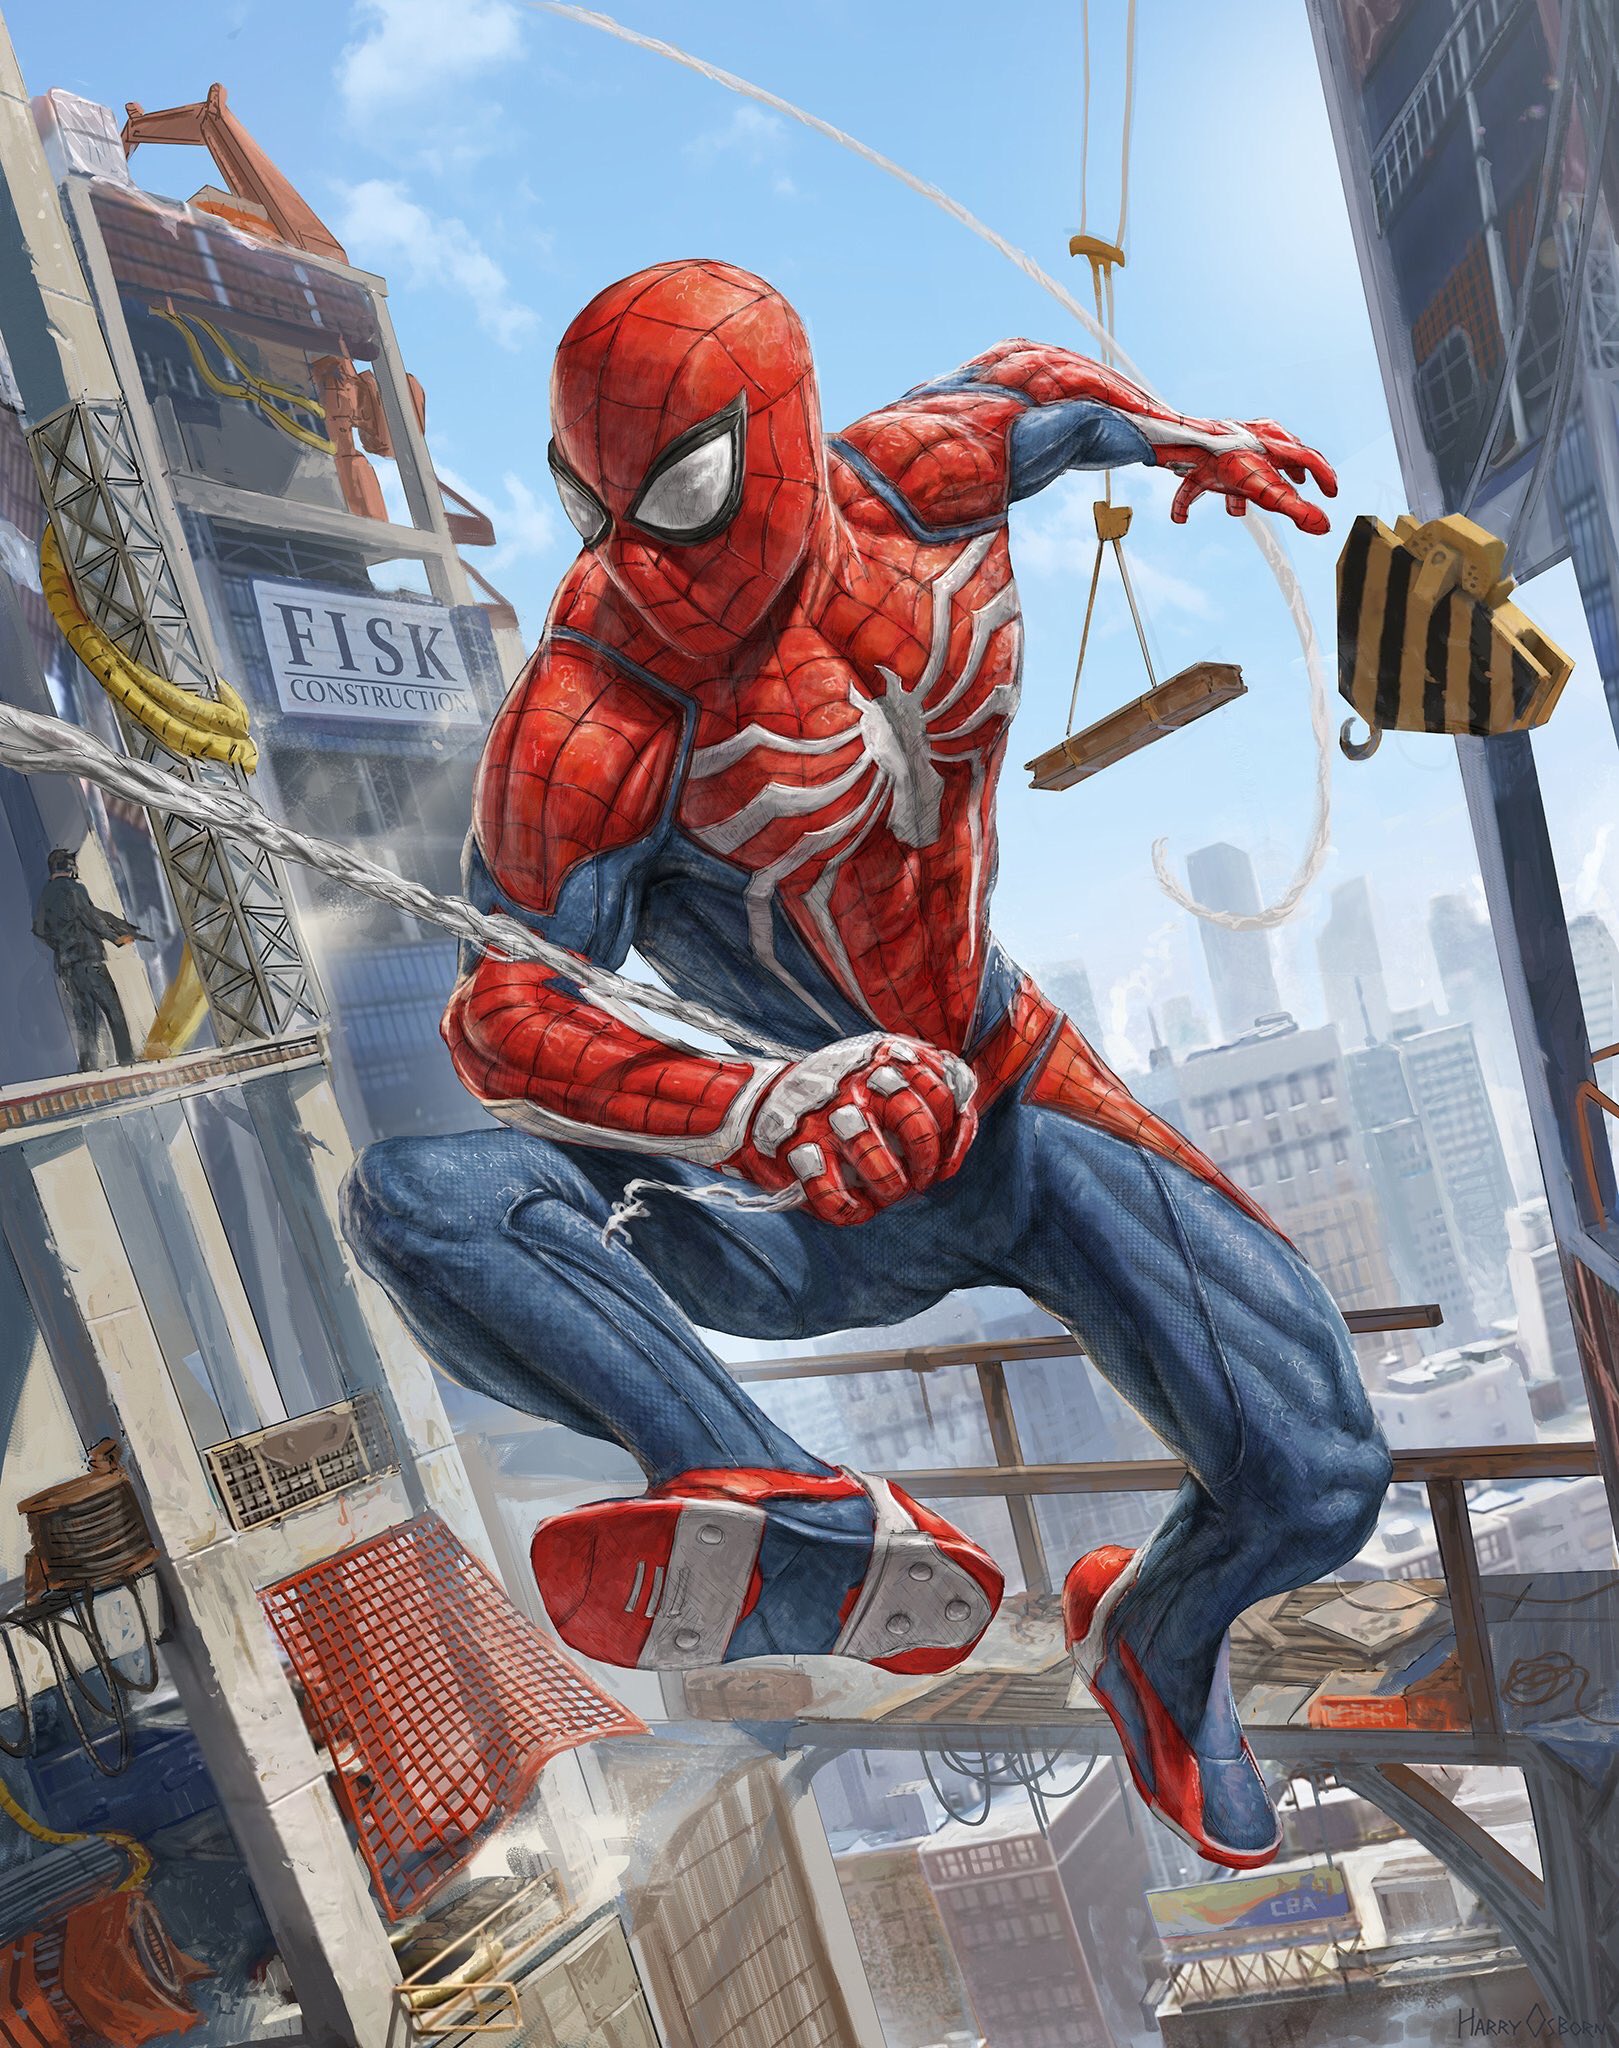 Insomniac Games on Twitter: "Incredible #SpidermanPS4 from @HarryOsbornArt - wow! https://t.co/kV0pohGBRm" / Twitter